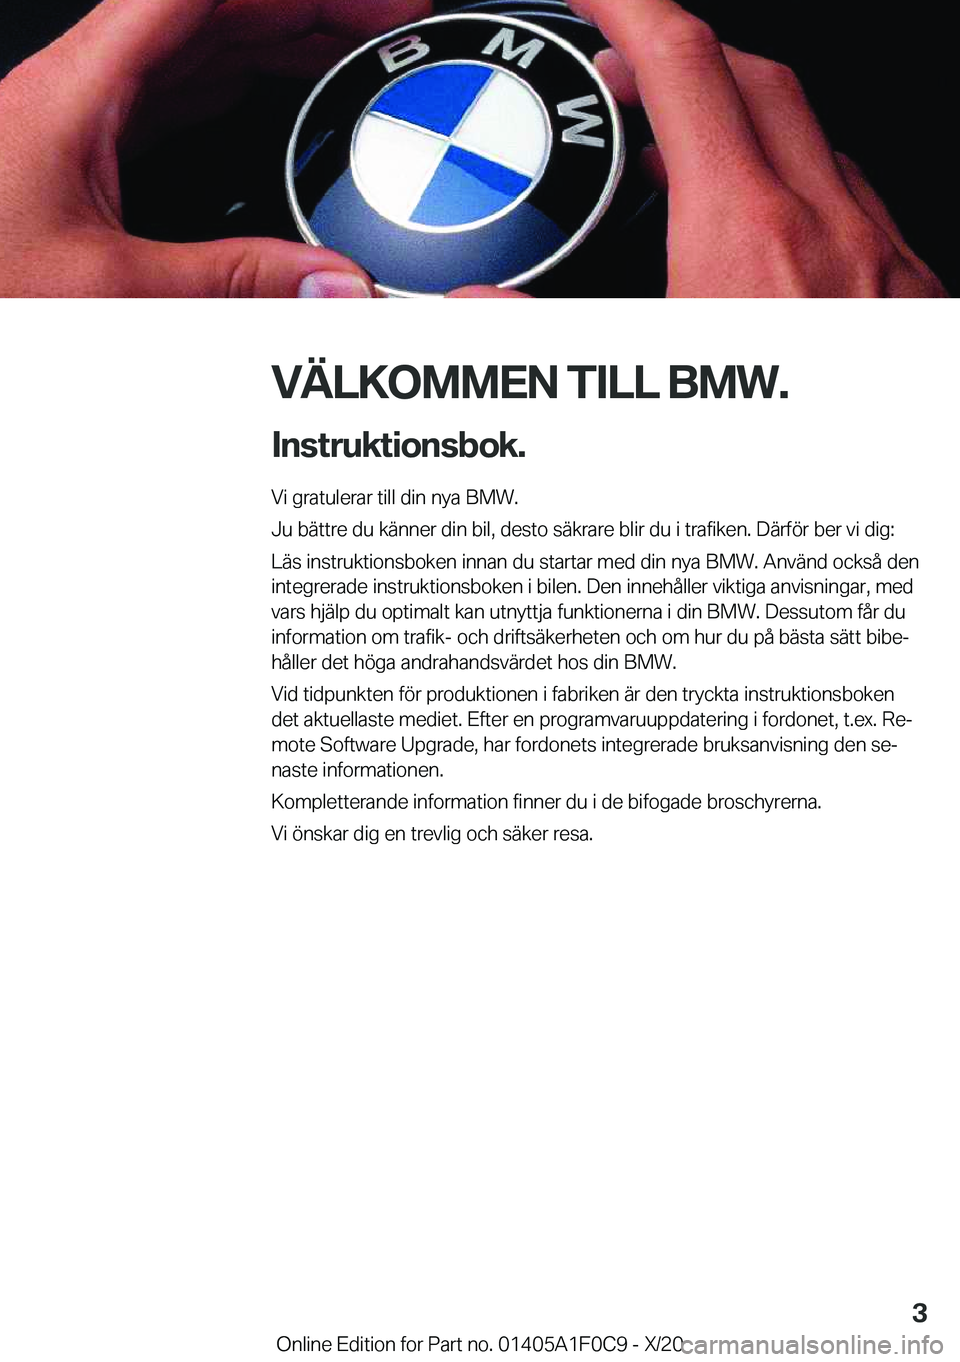 BMW X6 2021  InstruktionsbÖcker (in Swedish) �V�Ä�L�K�O�M�M�E�N��T�I�L�L��B�M�W�.�I�n�s�t�r�u�k�t�i�o�n�s�b�o�k�.
�V�i��g�r�a�t�u�l�e�r�a�r��t�i�l�l��d�i�n��n�y�a��B�M�W�.
�J�u��b�ä�t�t�r�e��d�u��k�ä�n�n�e�r��d�i�n��b�i�l�,��d�e�